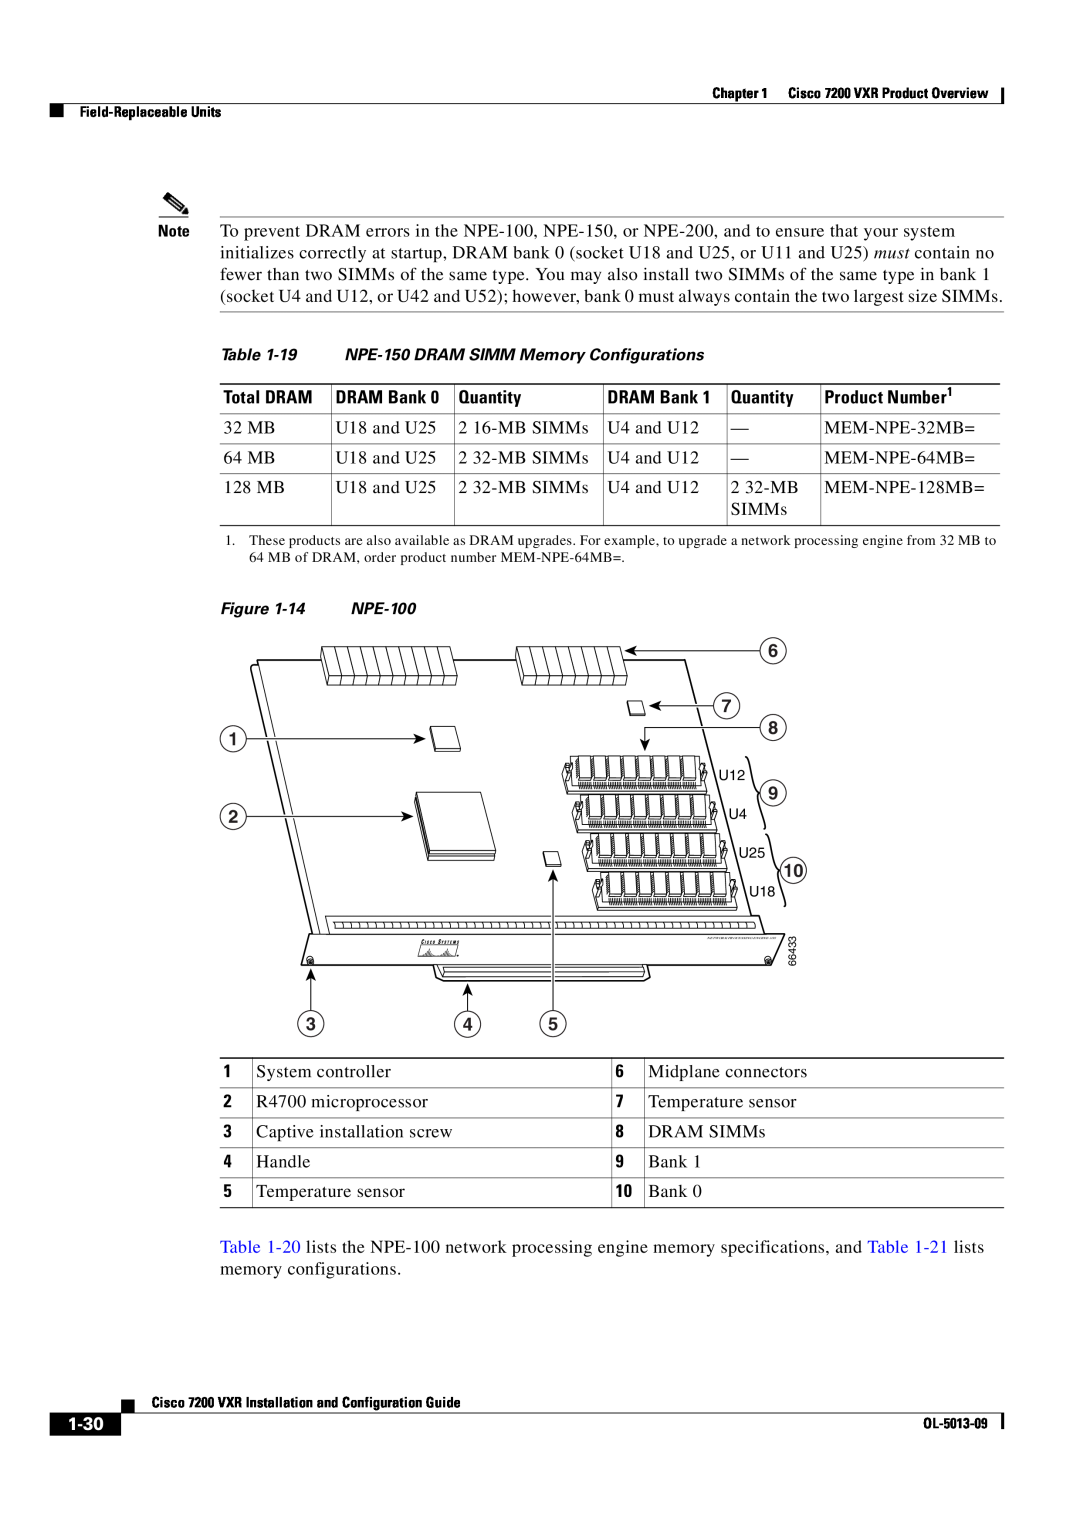 Cisco Systems 7200 VXR manual 1-30, NPE-150 DRAM SIMM Memory Configurations, NPE-100 